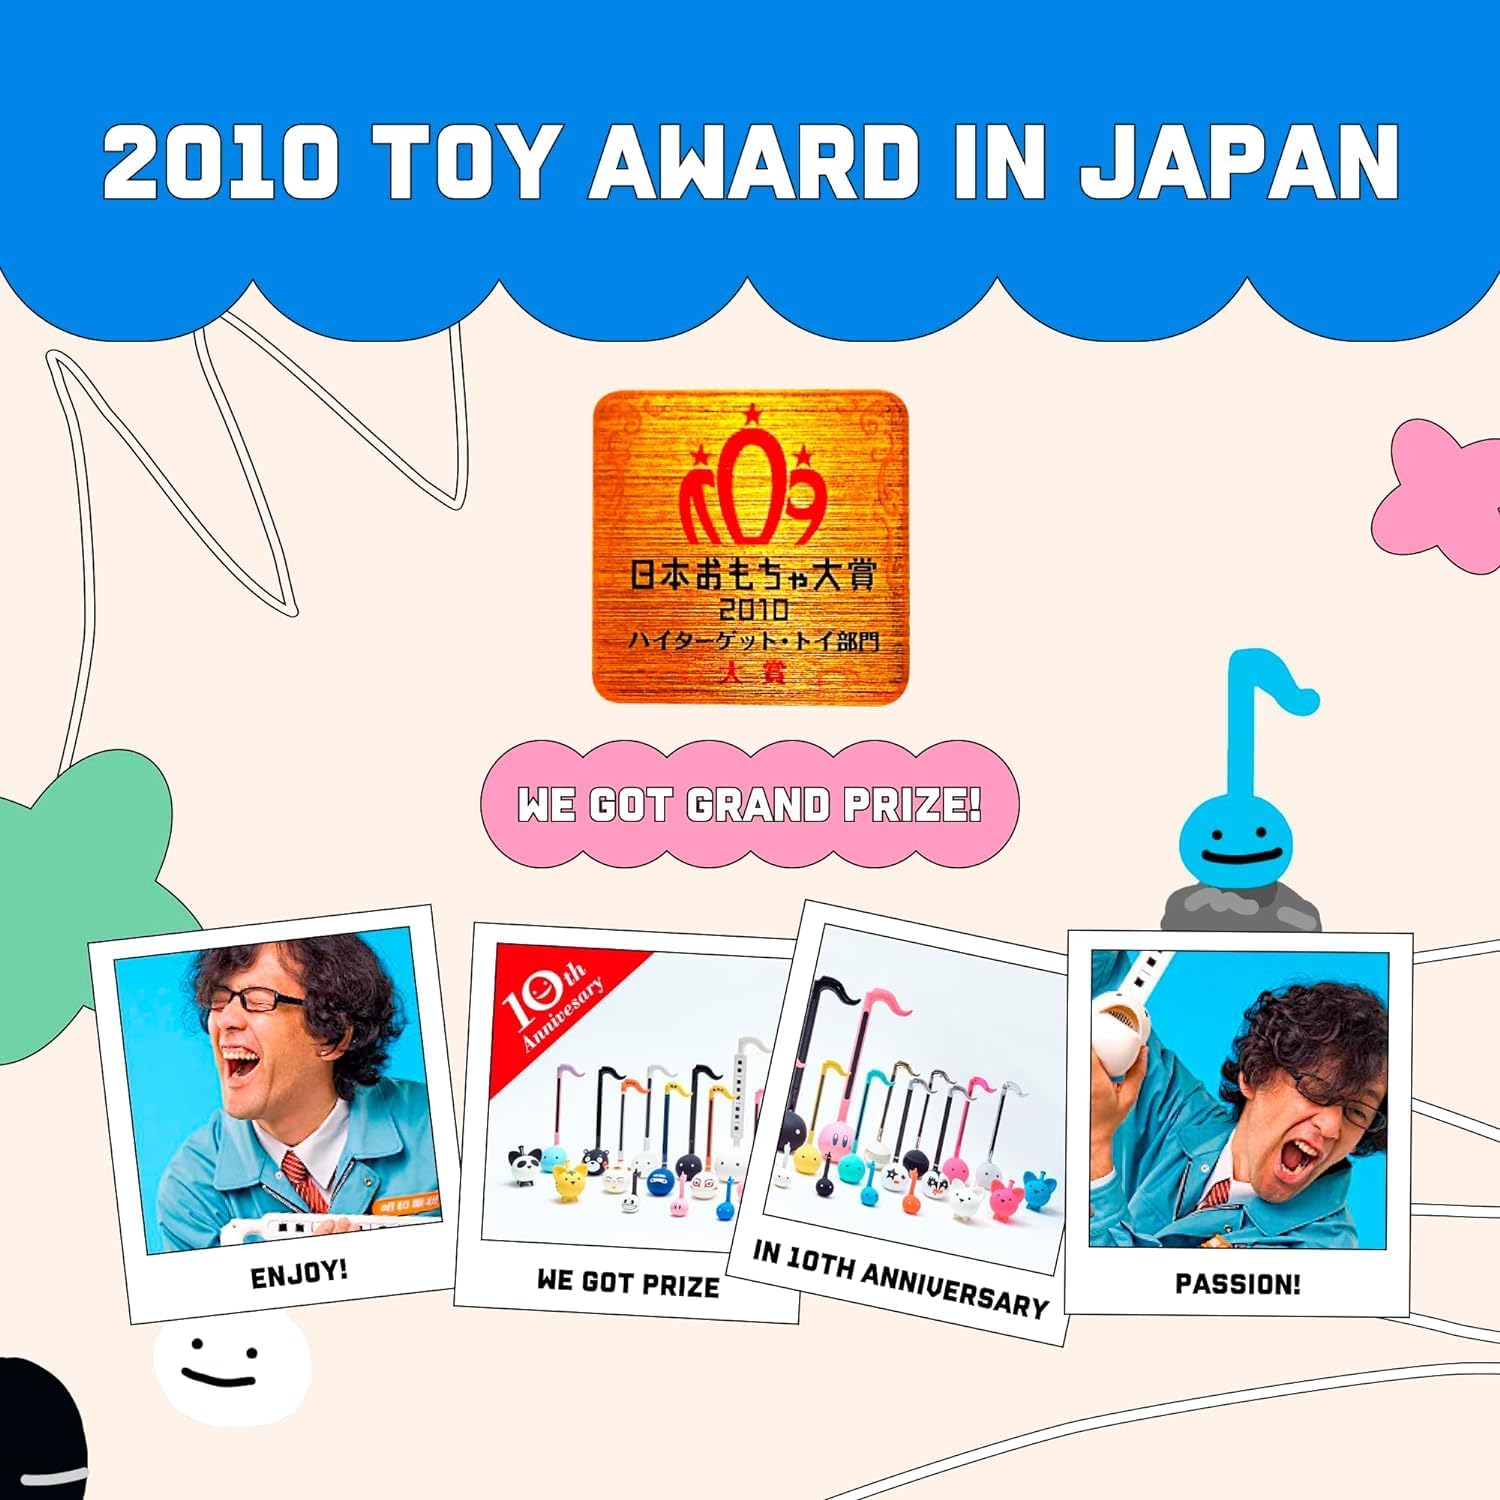 Otamatone Japanese Electronic Musical Instrument Portable Music Synthesizer from Japan by Maywa Denki Studio Award Winning, Educational Fun Gift for Children, Teens & Adults - White